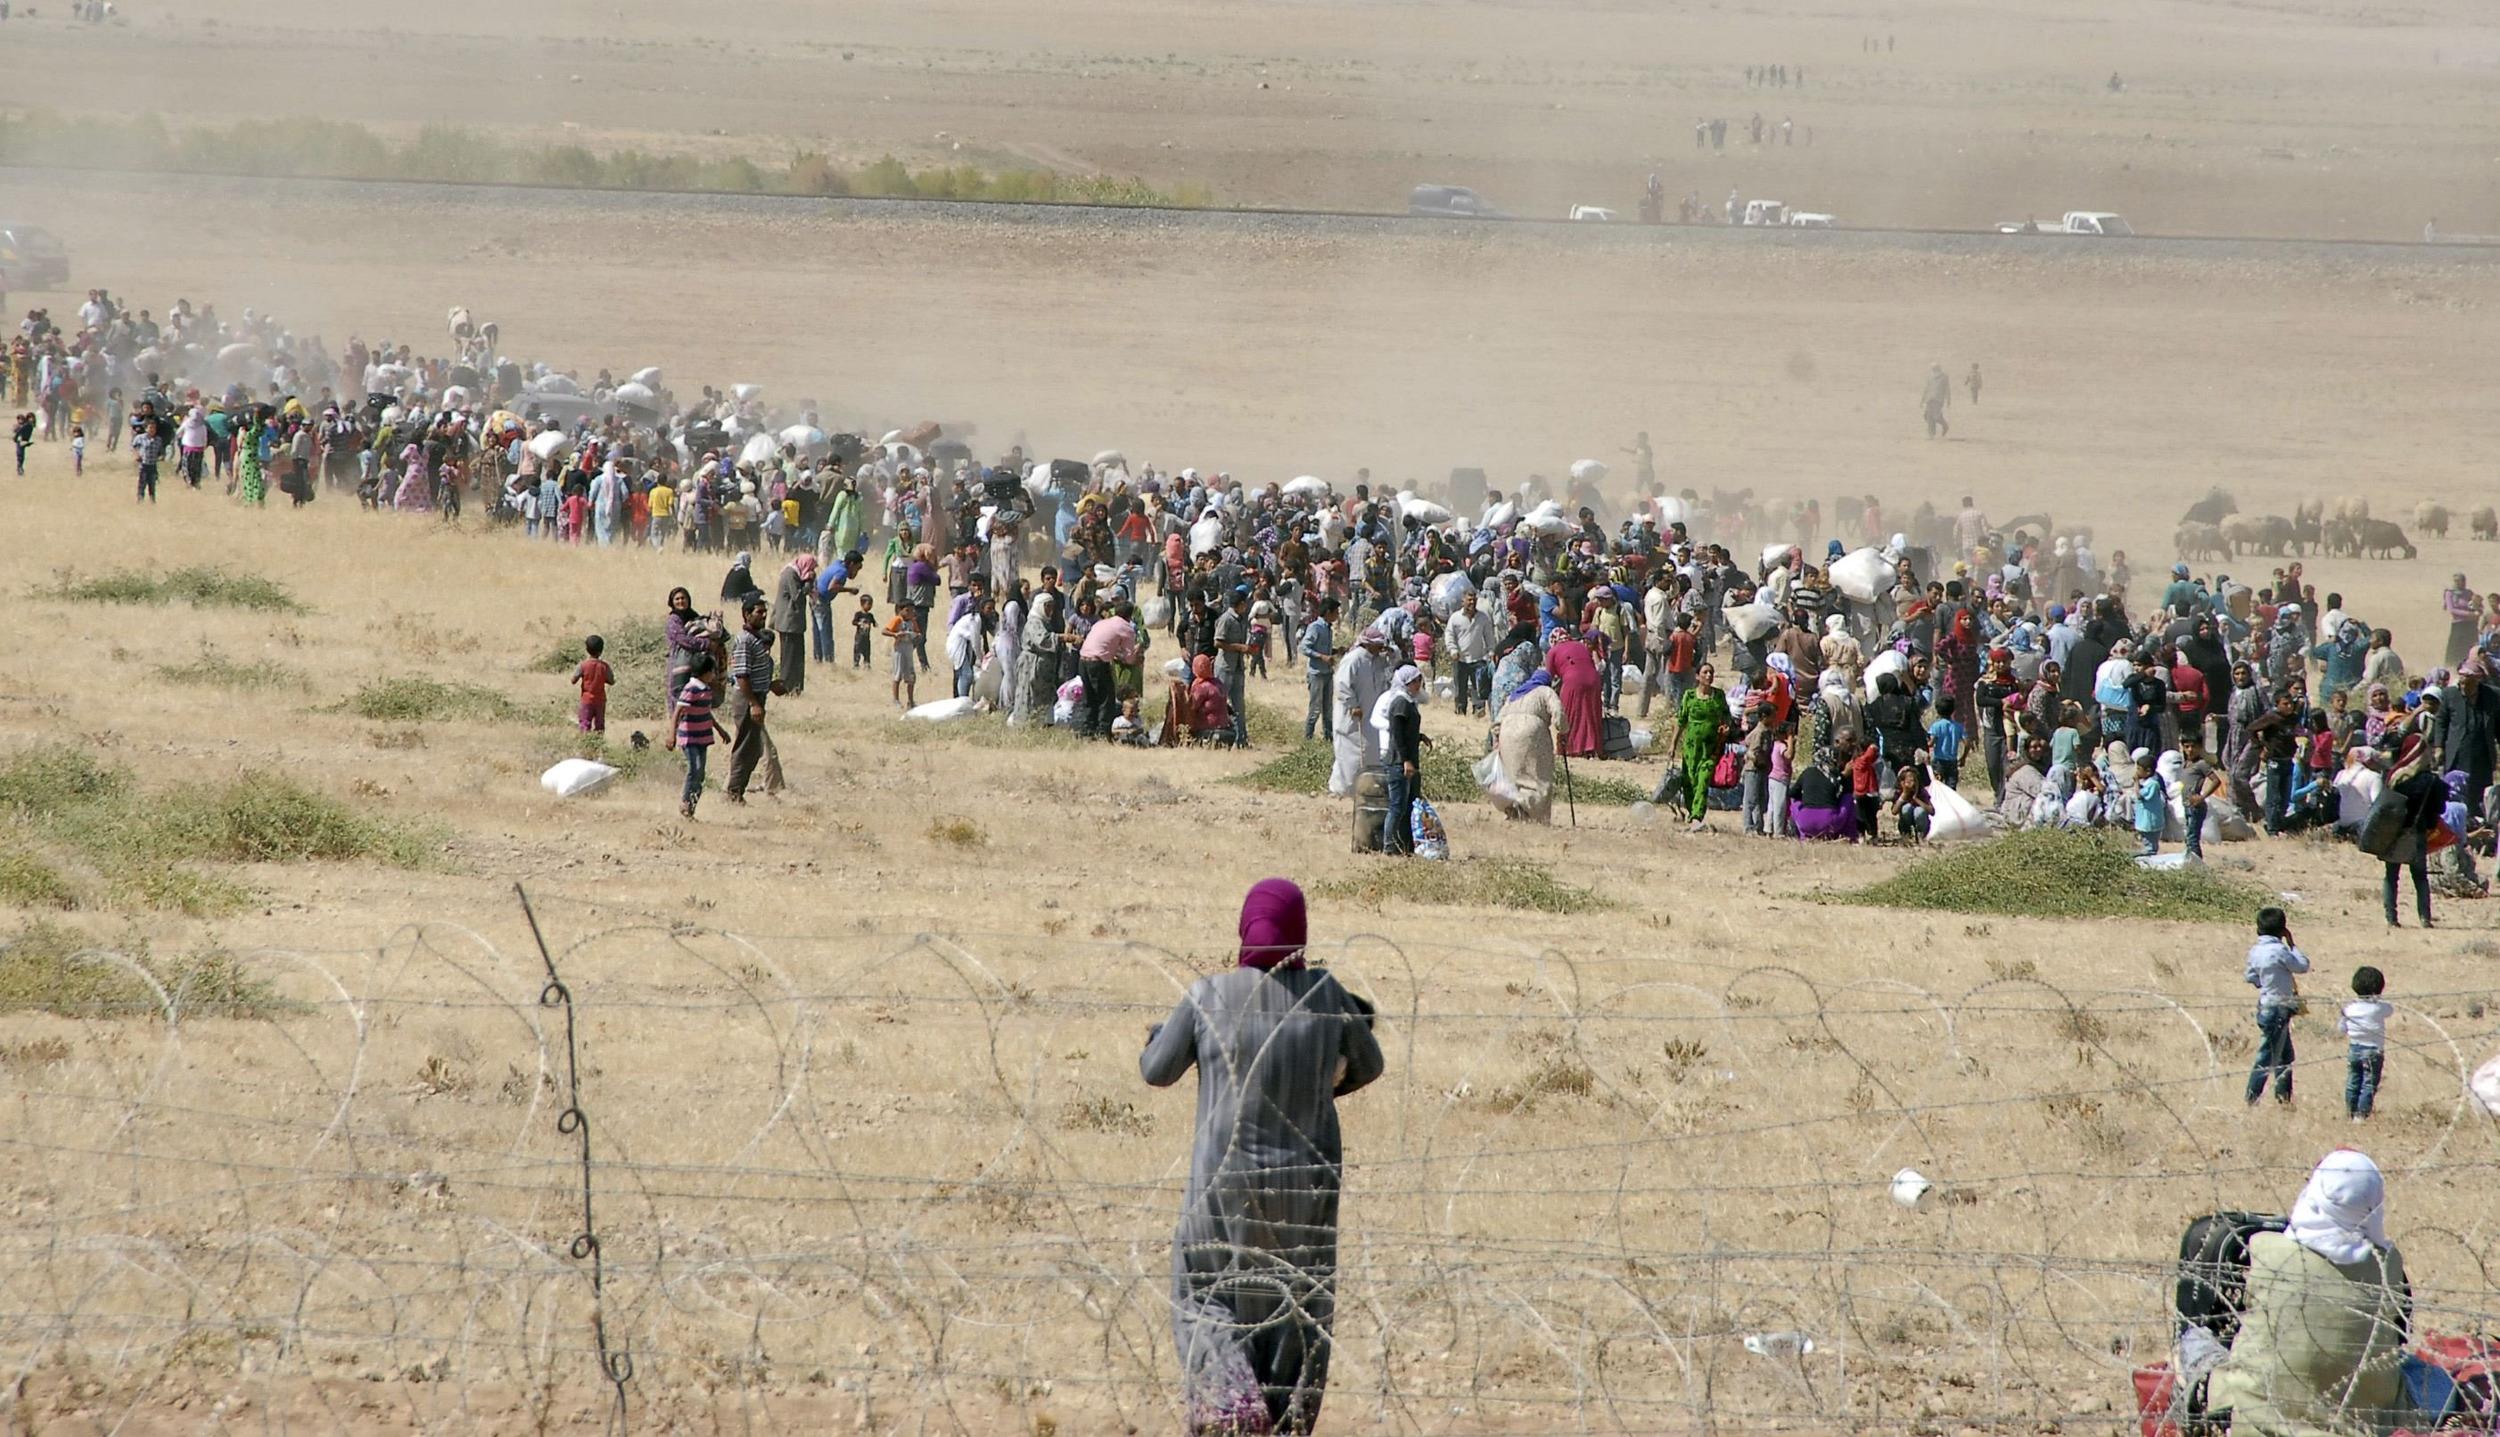 While Kobani is Falling, Politics or Humanity?